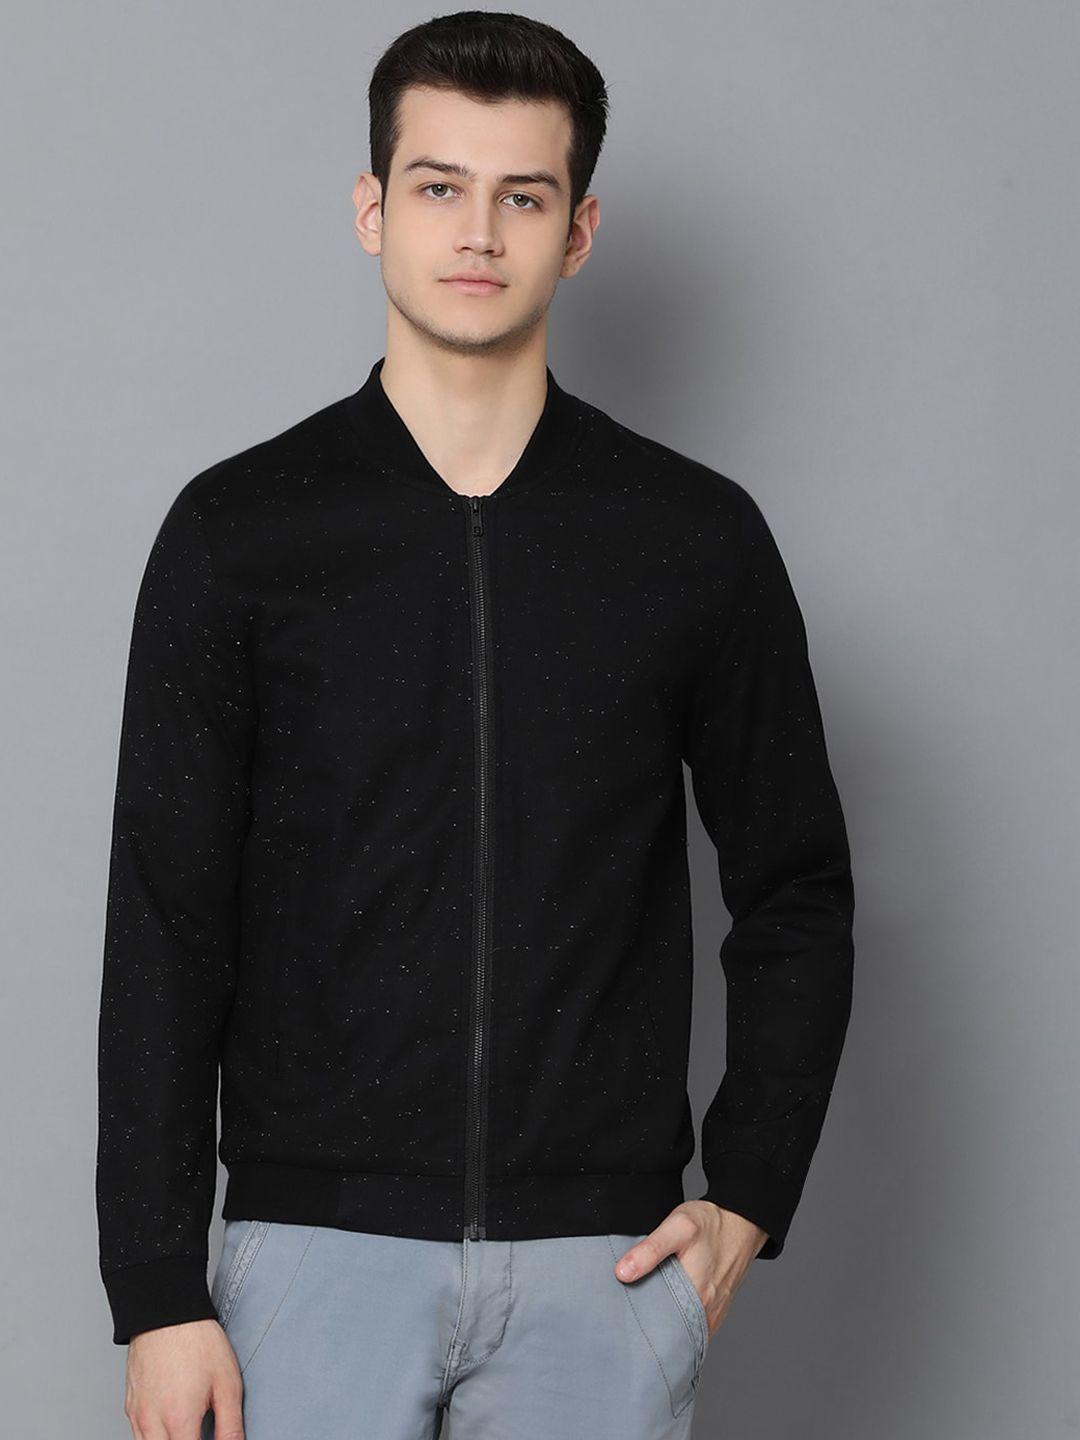 lindbergh-men-black-solid-cardigan-sweater